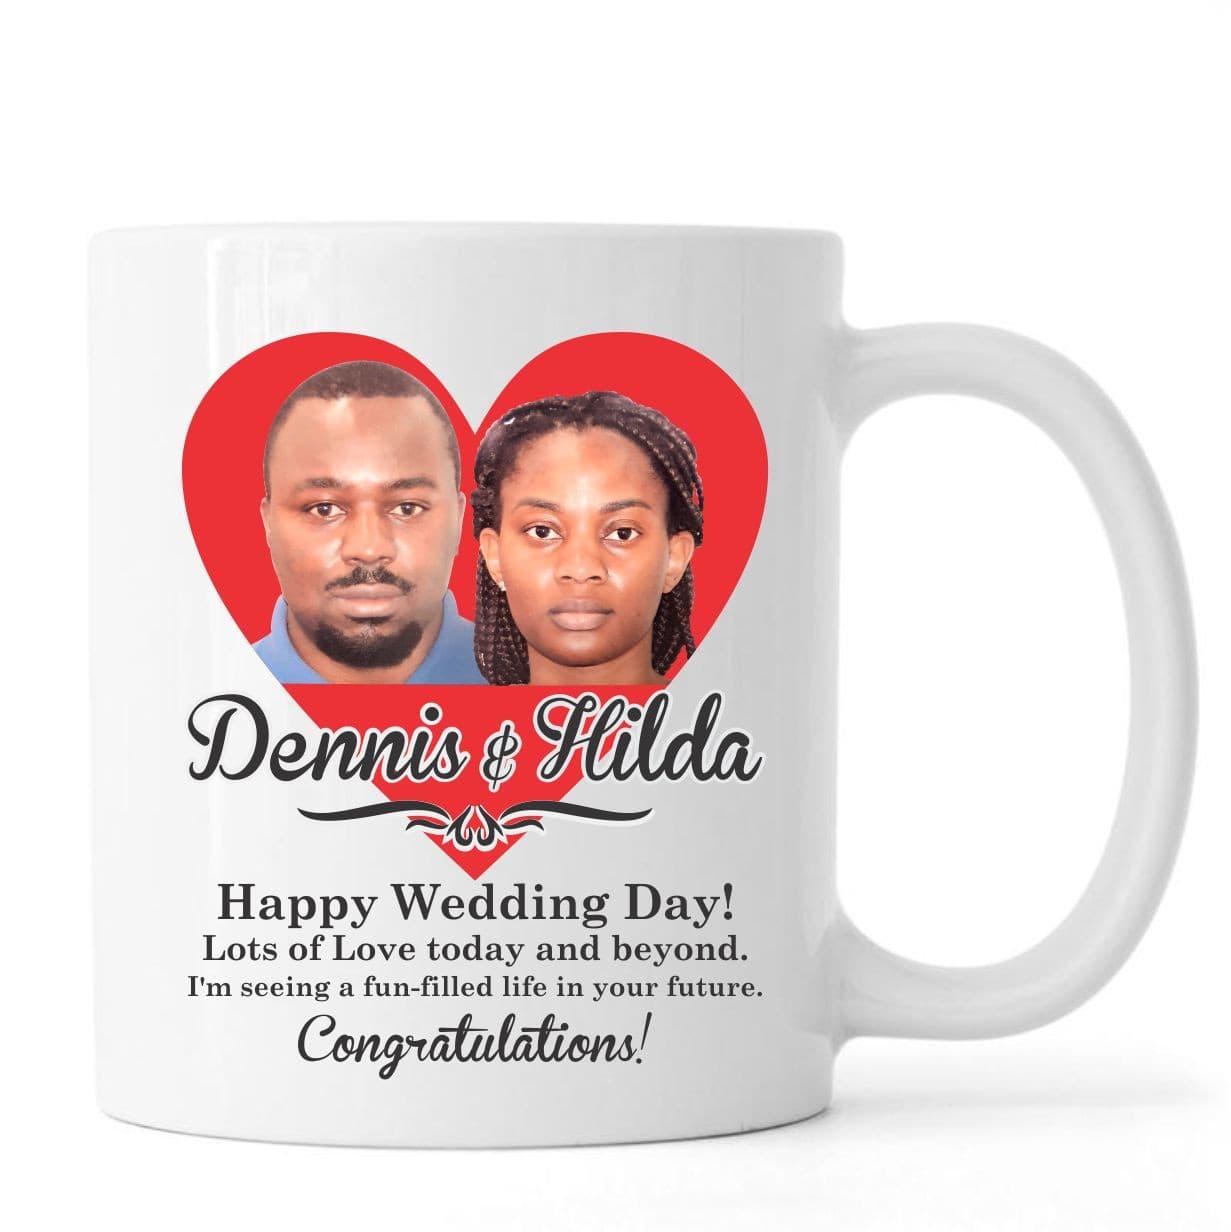 Wedding Day Mug Gift - Cherish Your Special Day